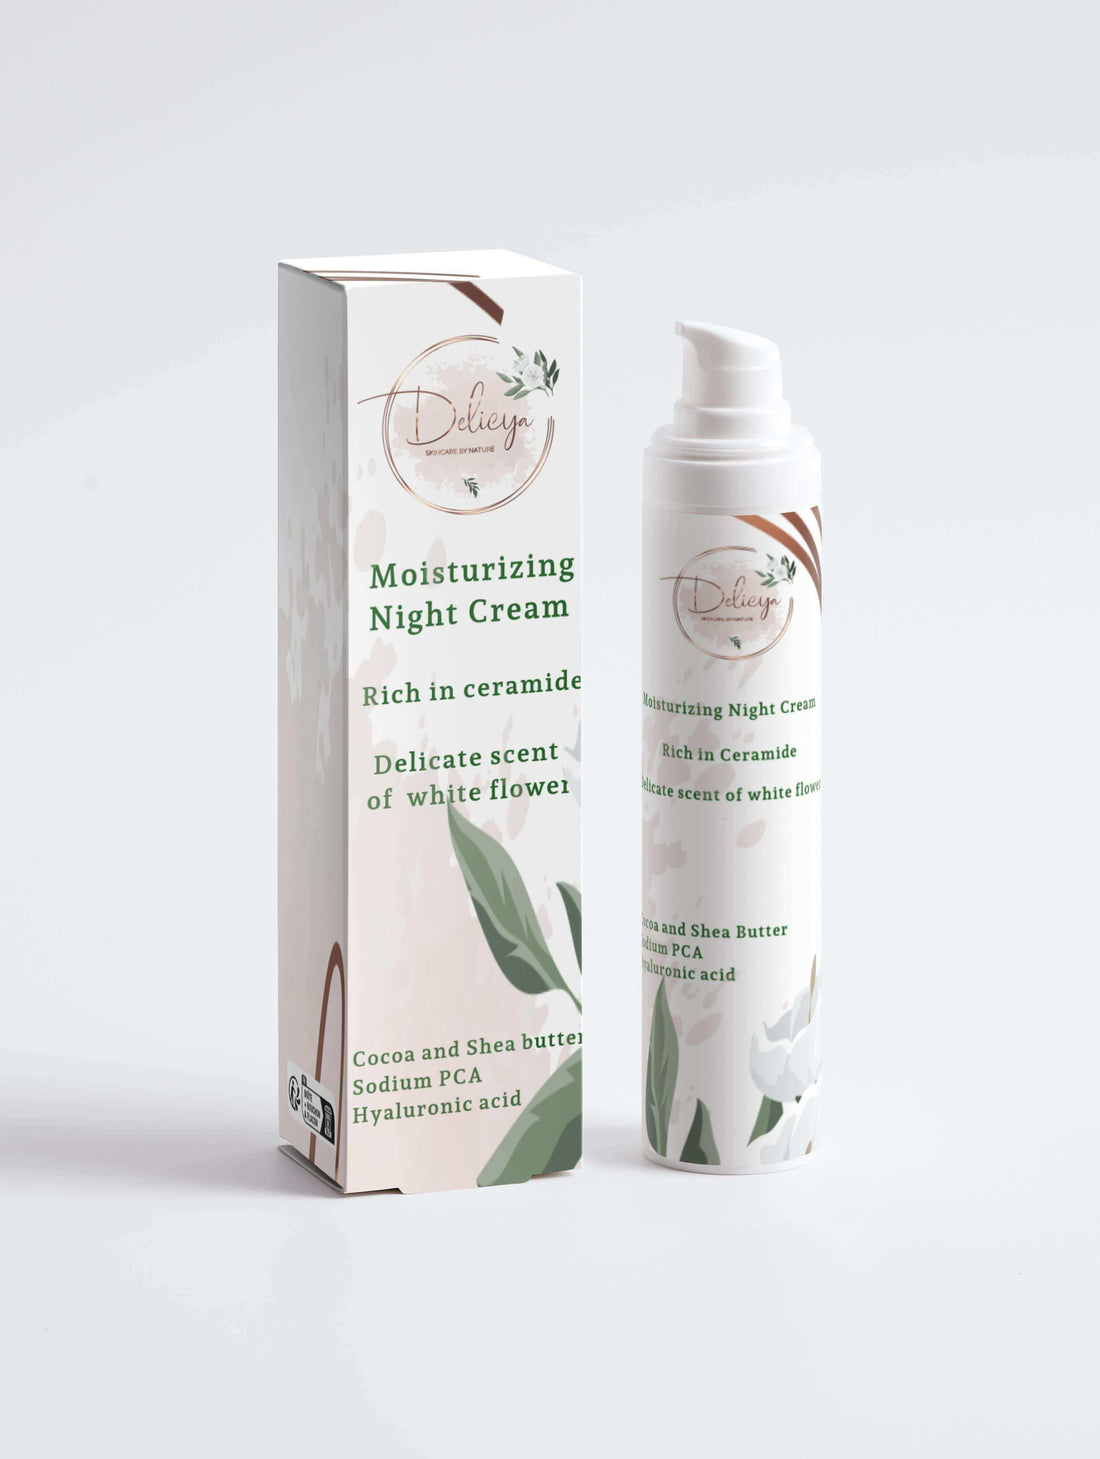 Moisturizing Night Cream 50ml - Delicya skincare natural rejuvenation process